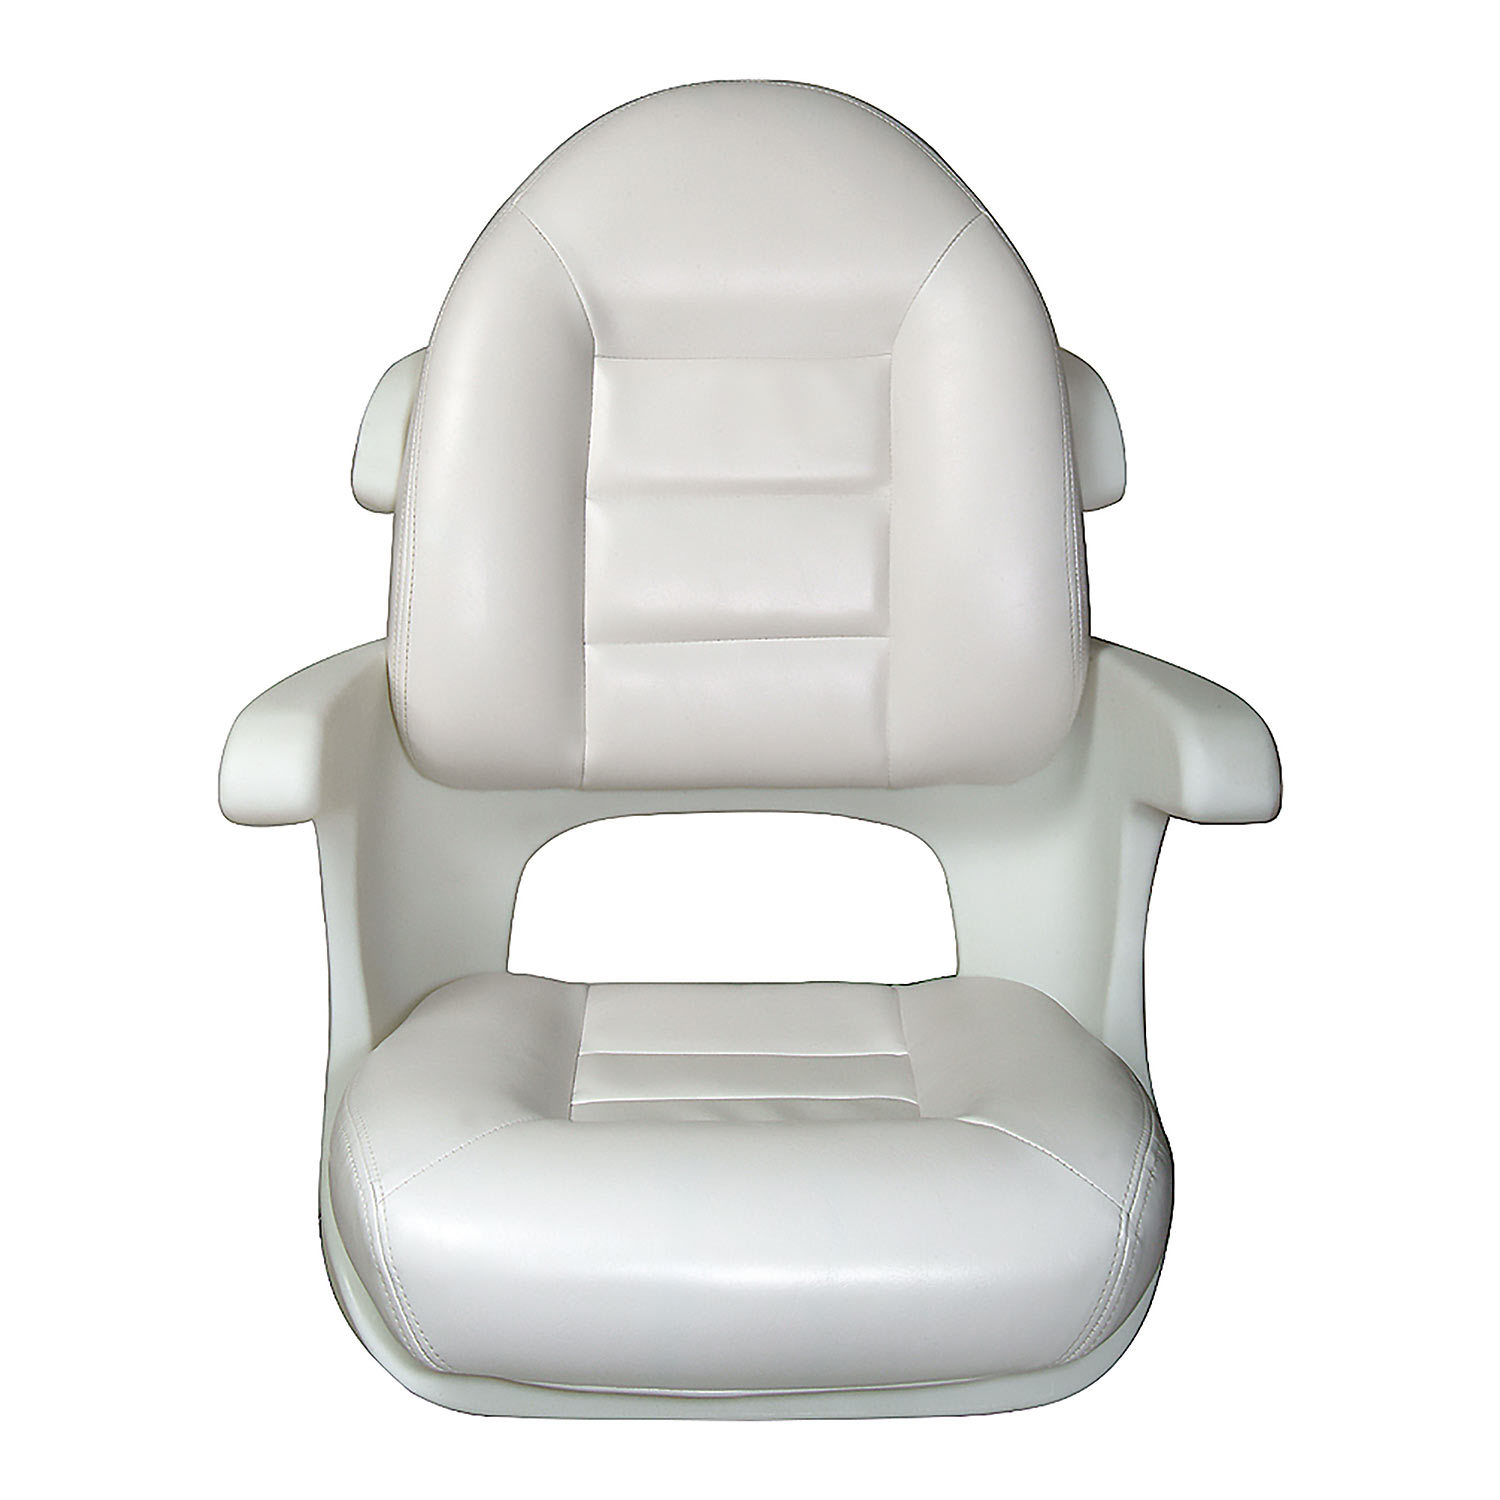 TEMPRESS Tempress Elite Helm Seat, High Back, White